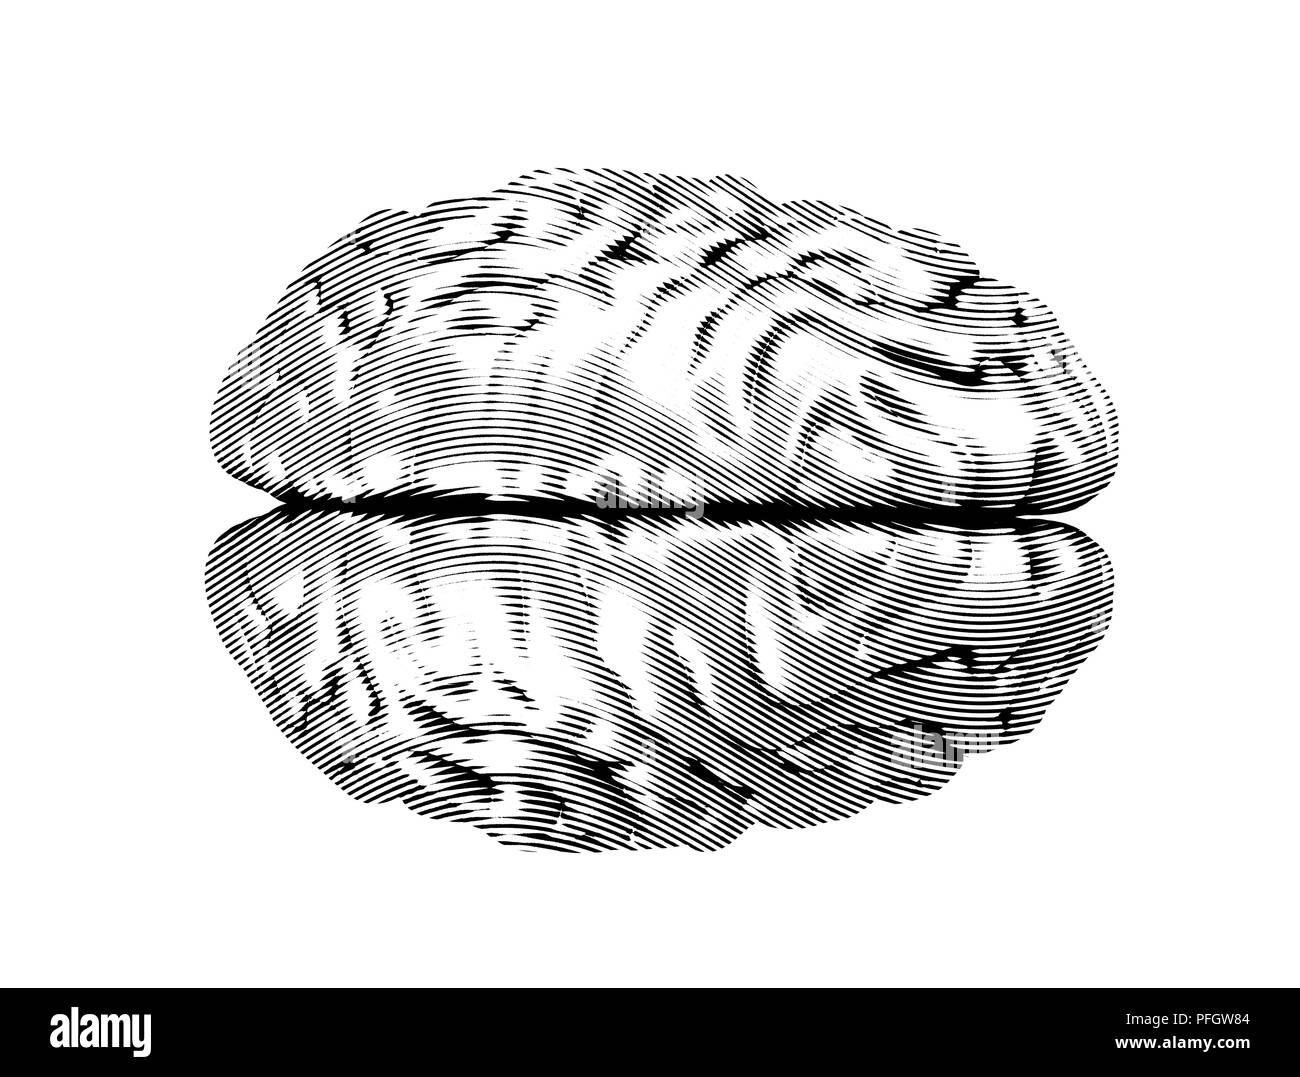 Engraving brain isolated on white background Stock Photo